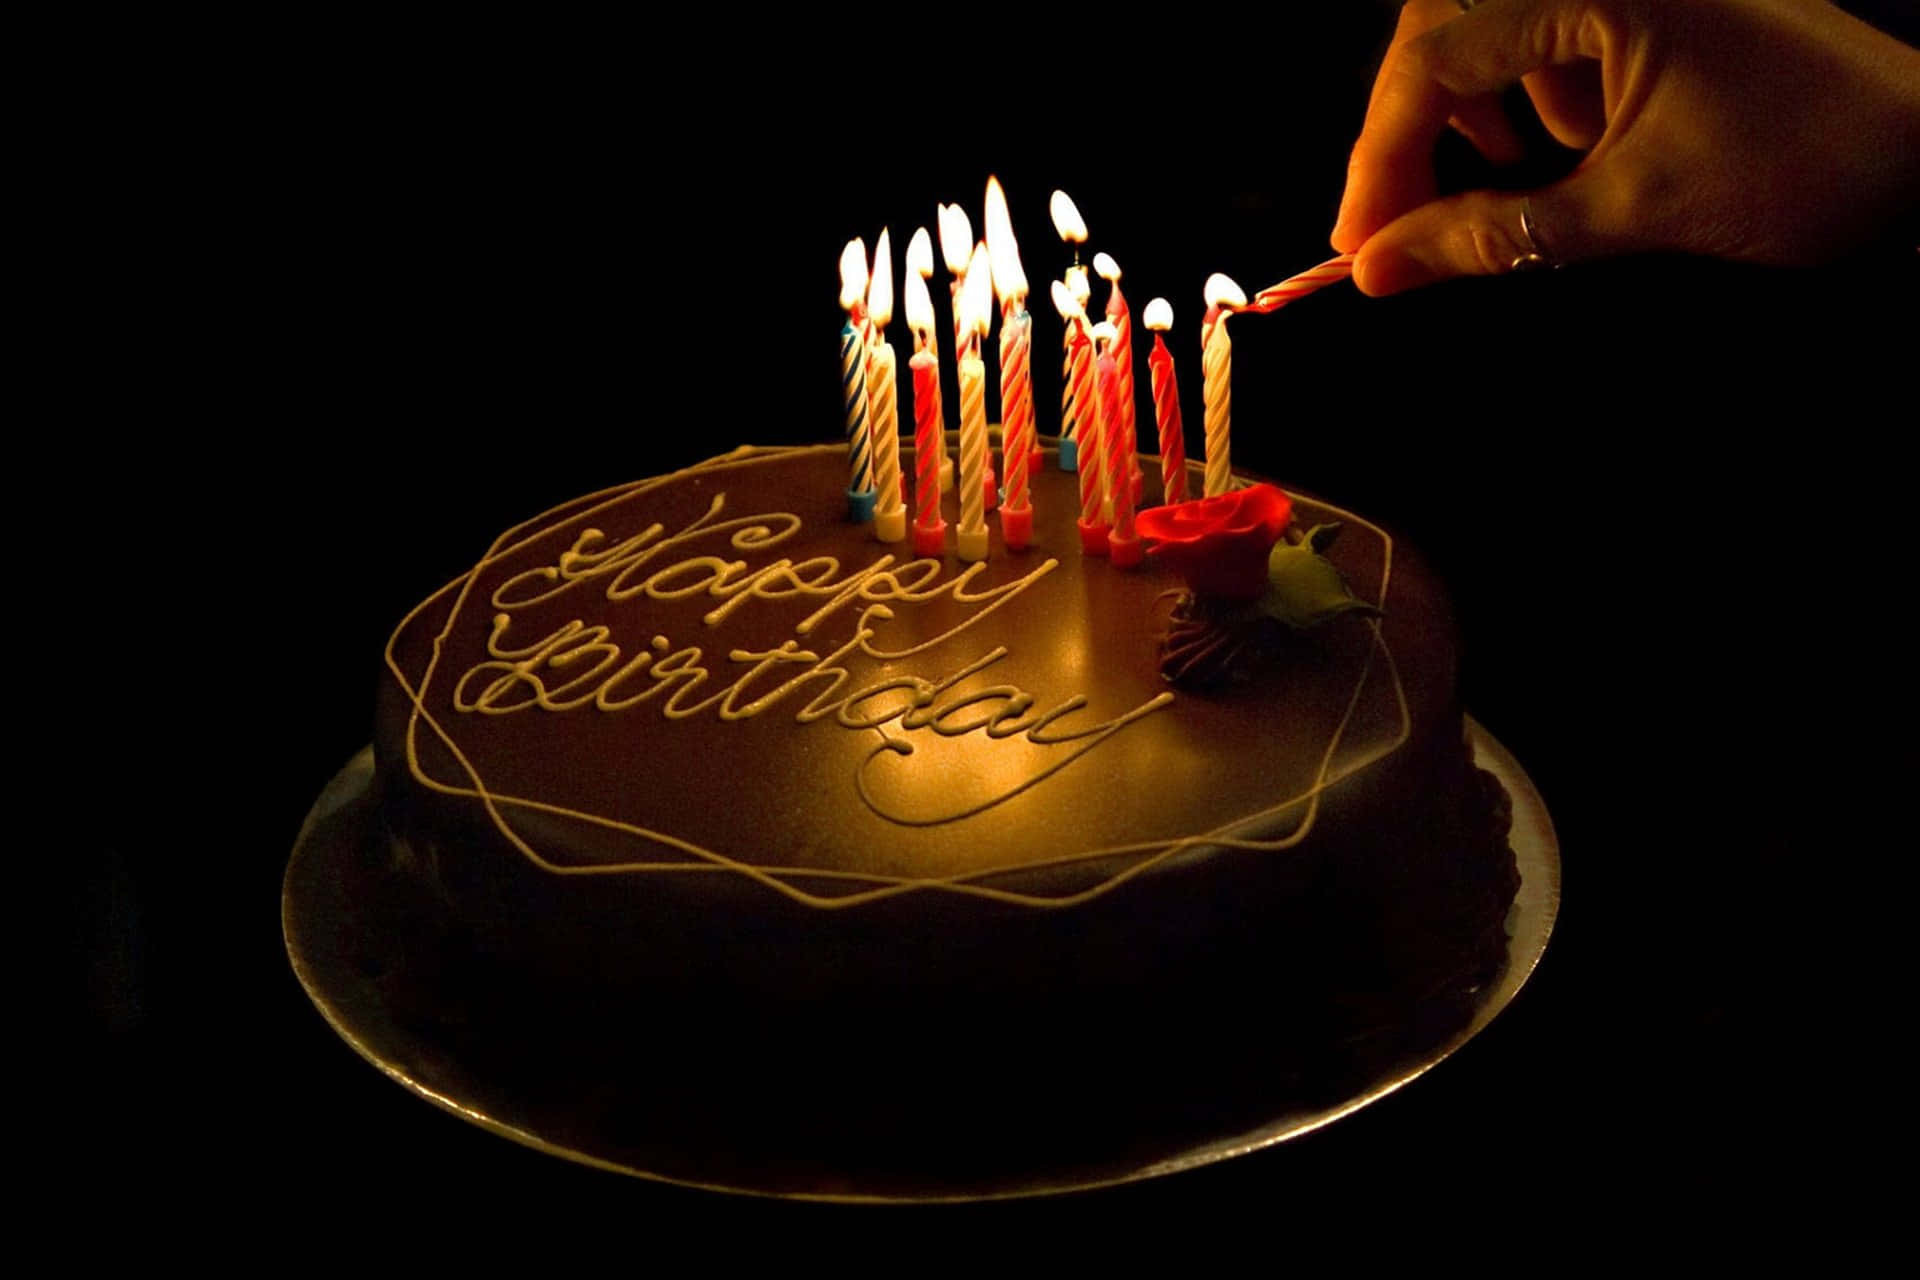 Celebrating with a Delightful Chocolate Birthday Cake